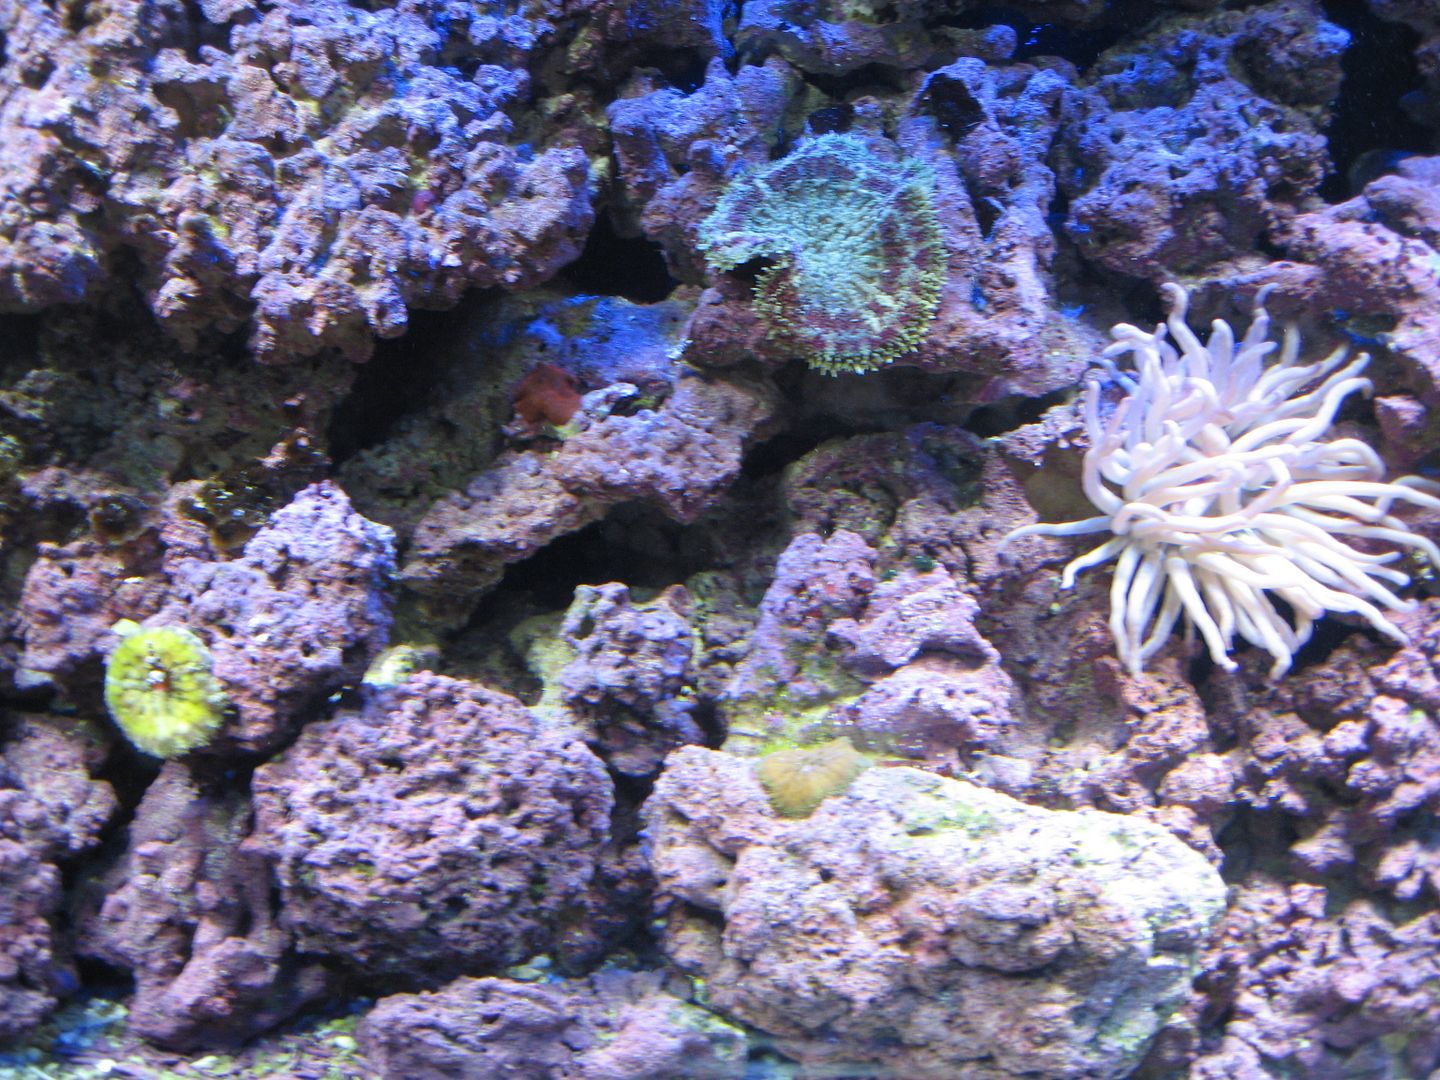 Aquarium_Middle_07MAY2012.jpg